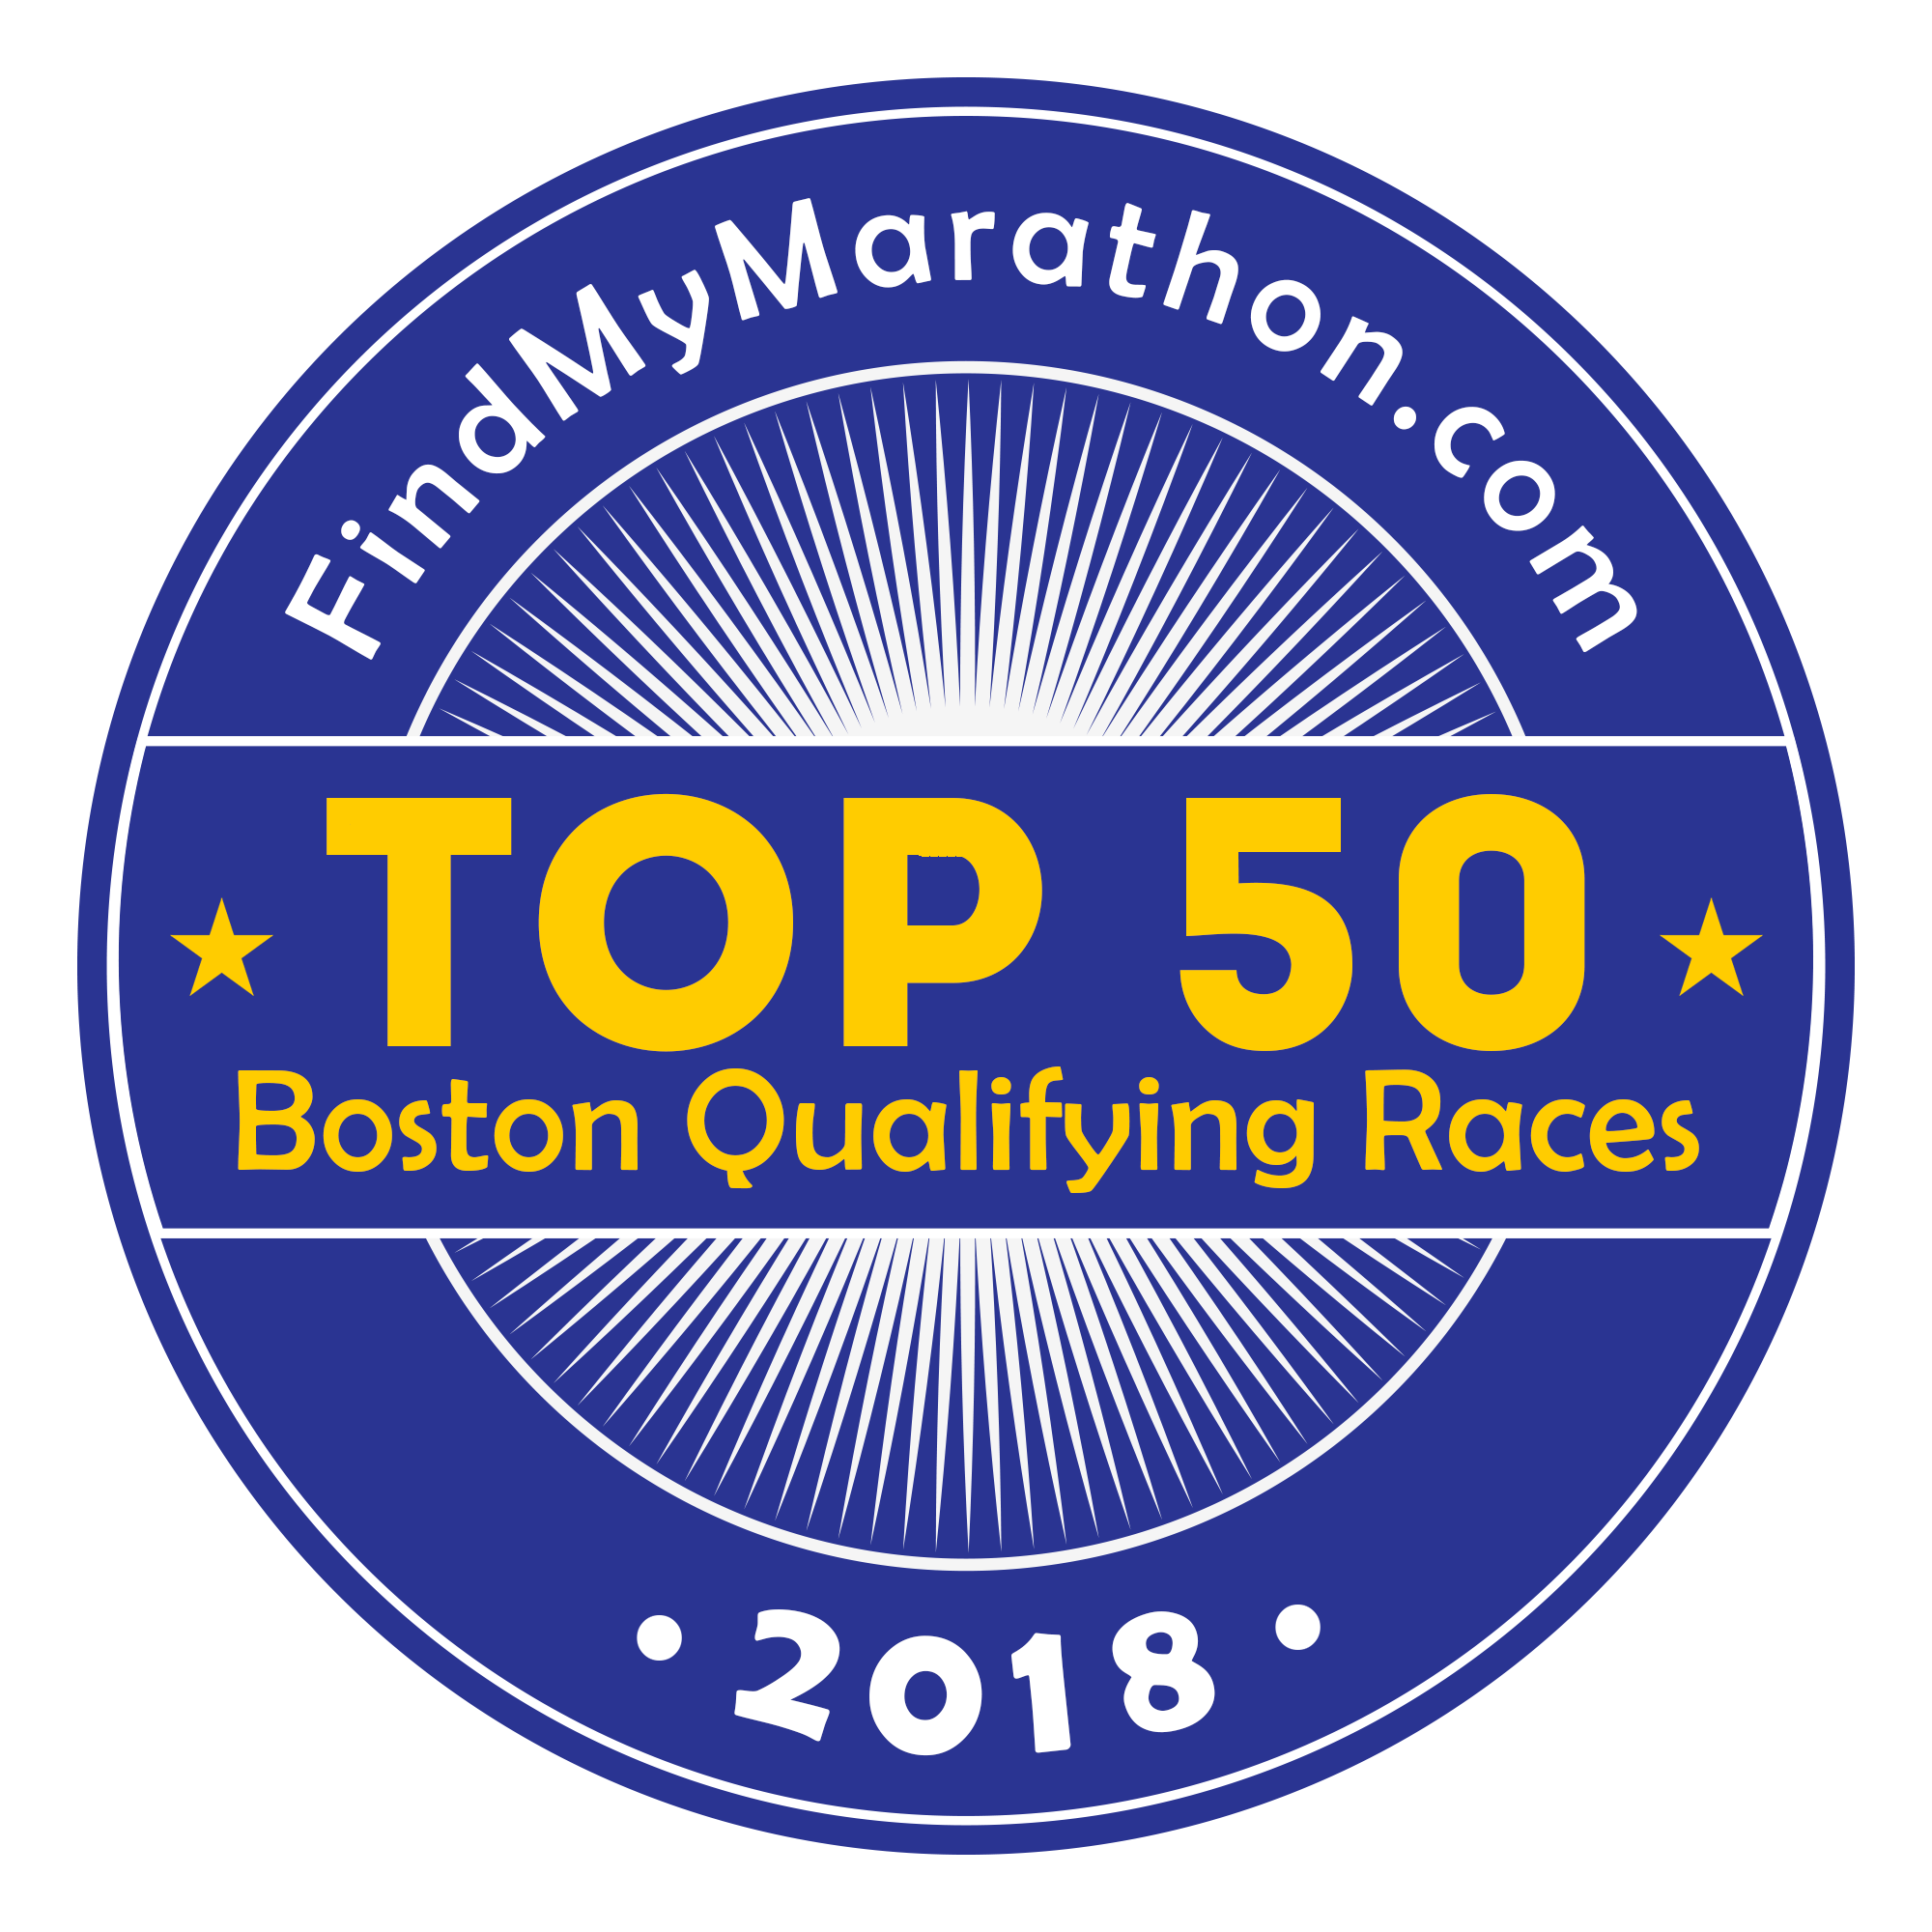 Top 50 Boston Qualifying Races